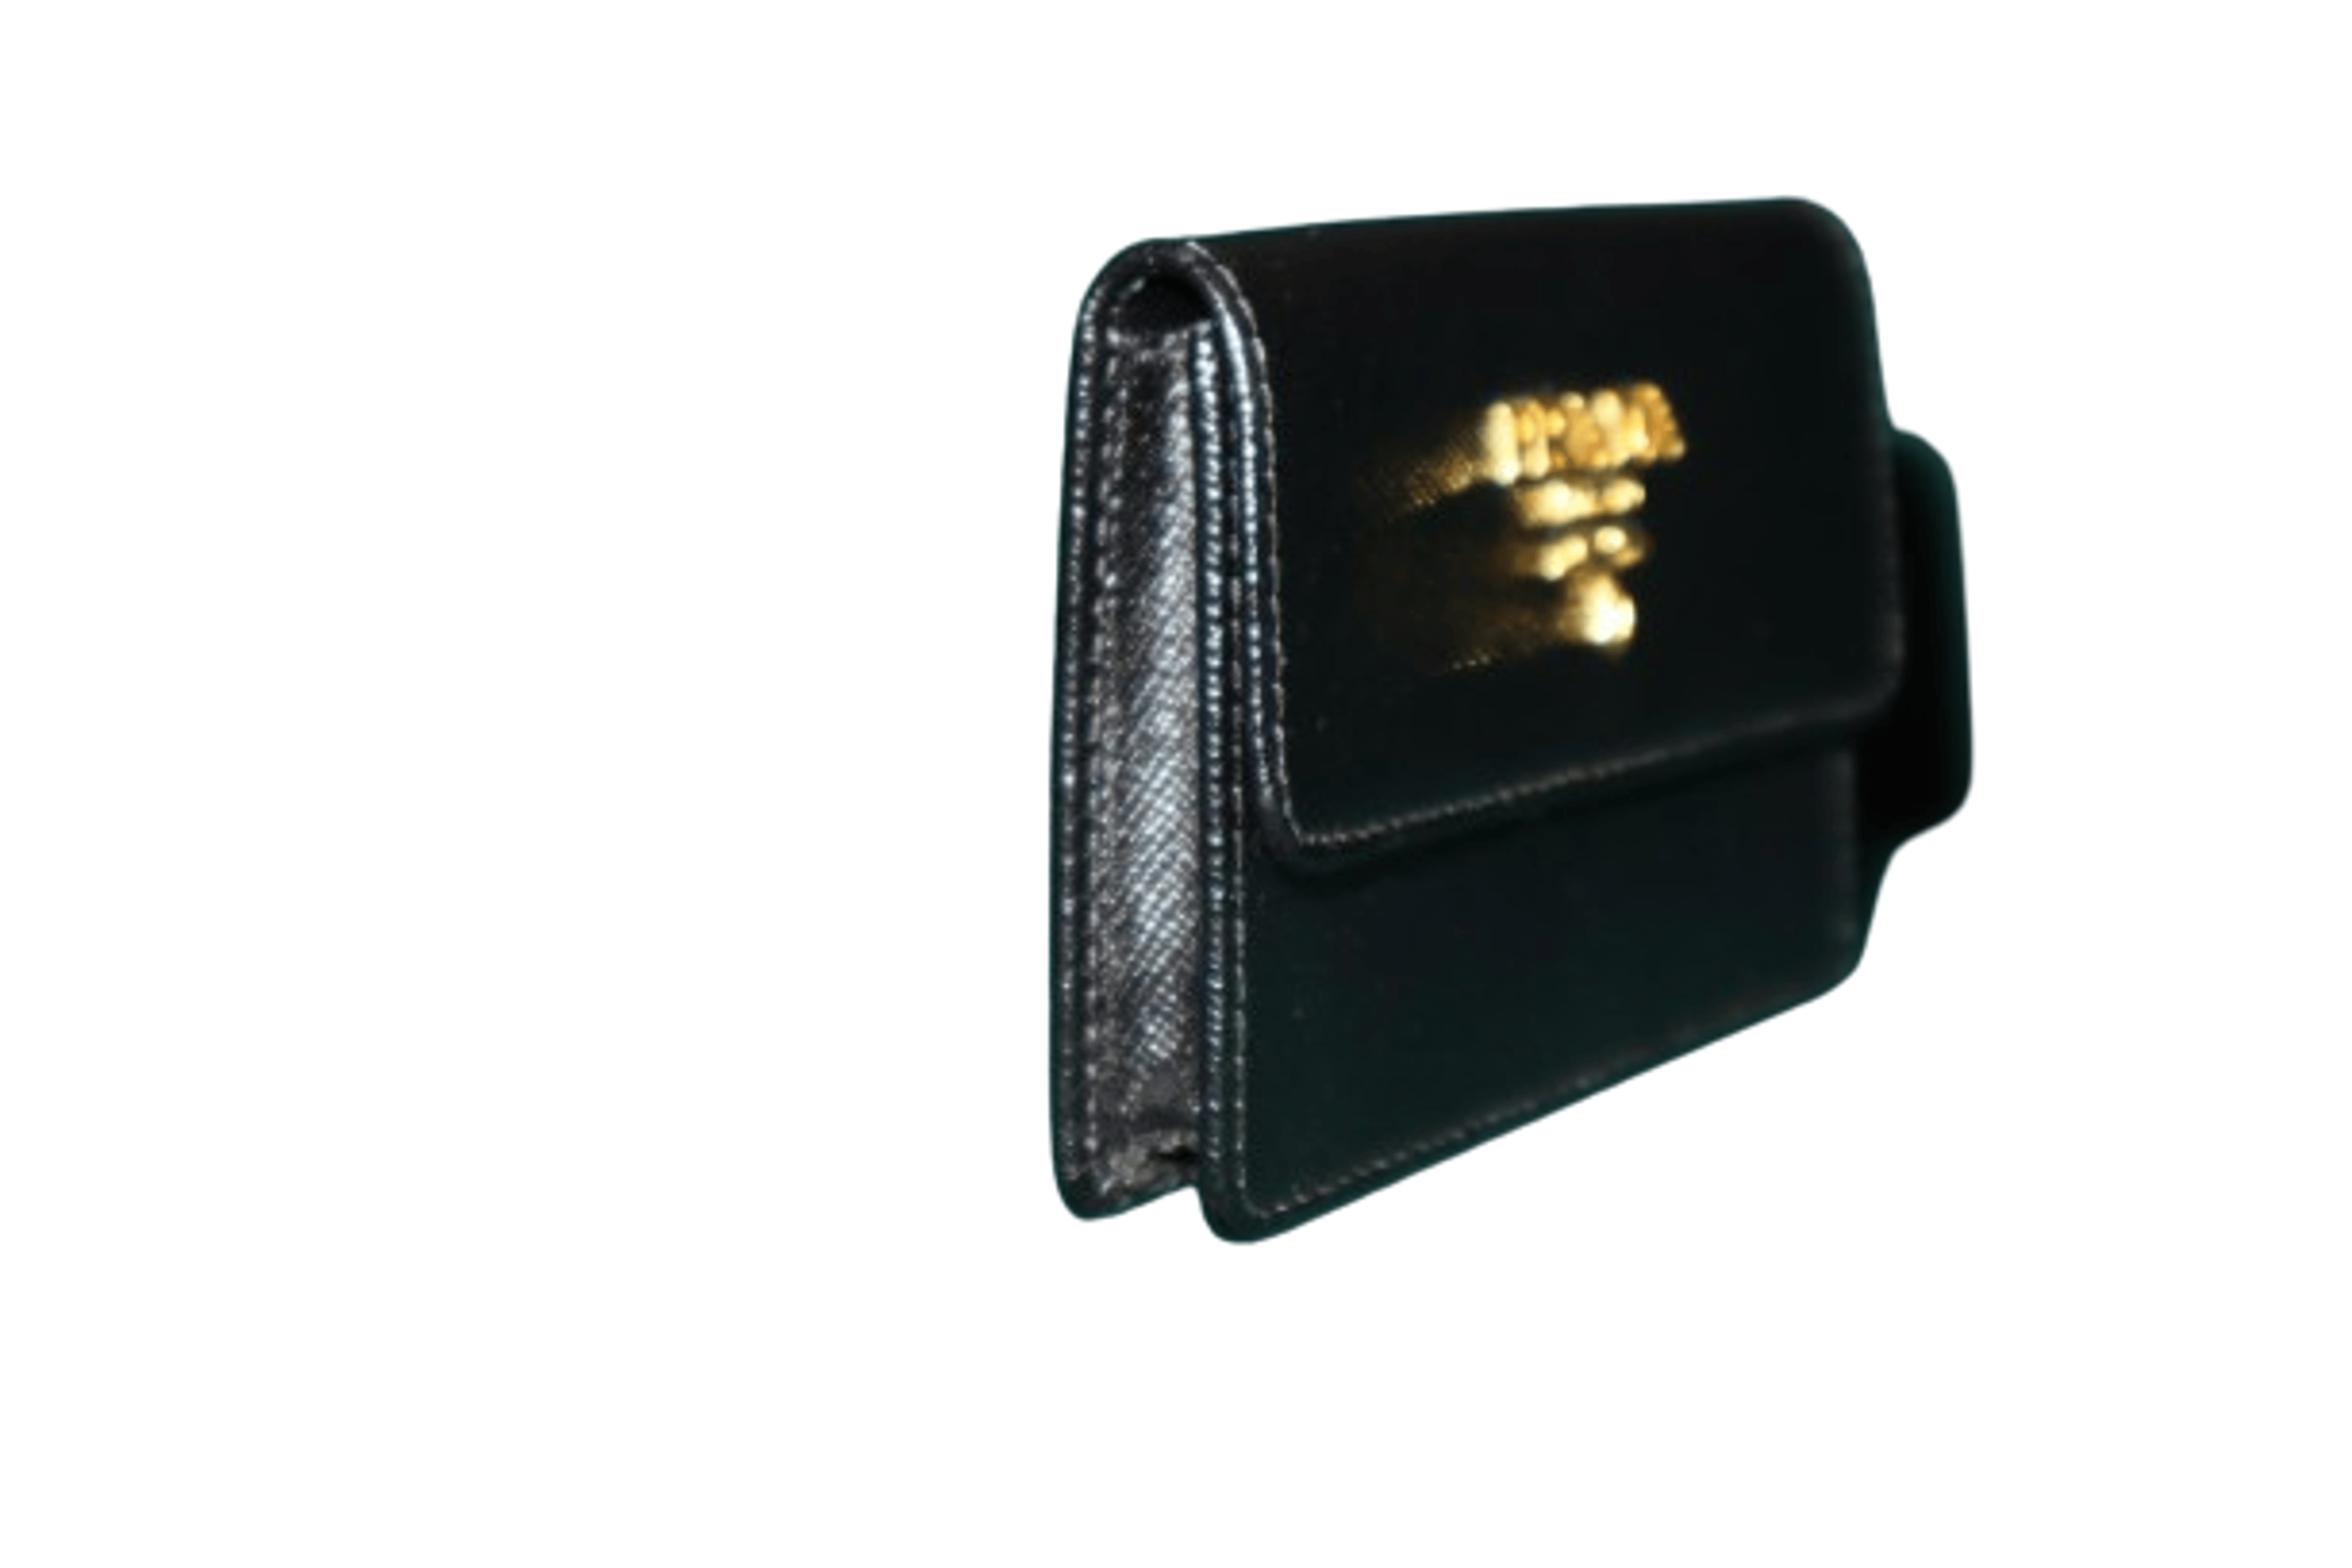 Alternate View 2 of Prada Black Saffiano Leather Flap Card Holder NEW